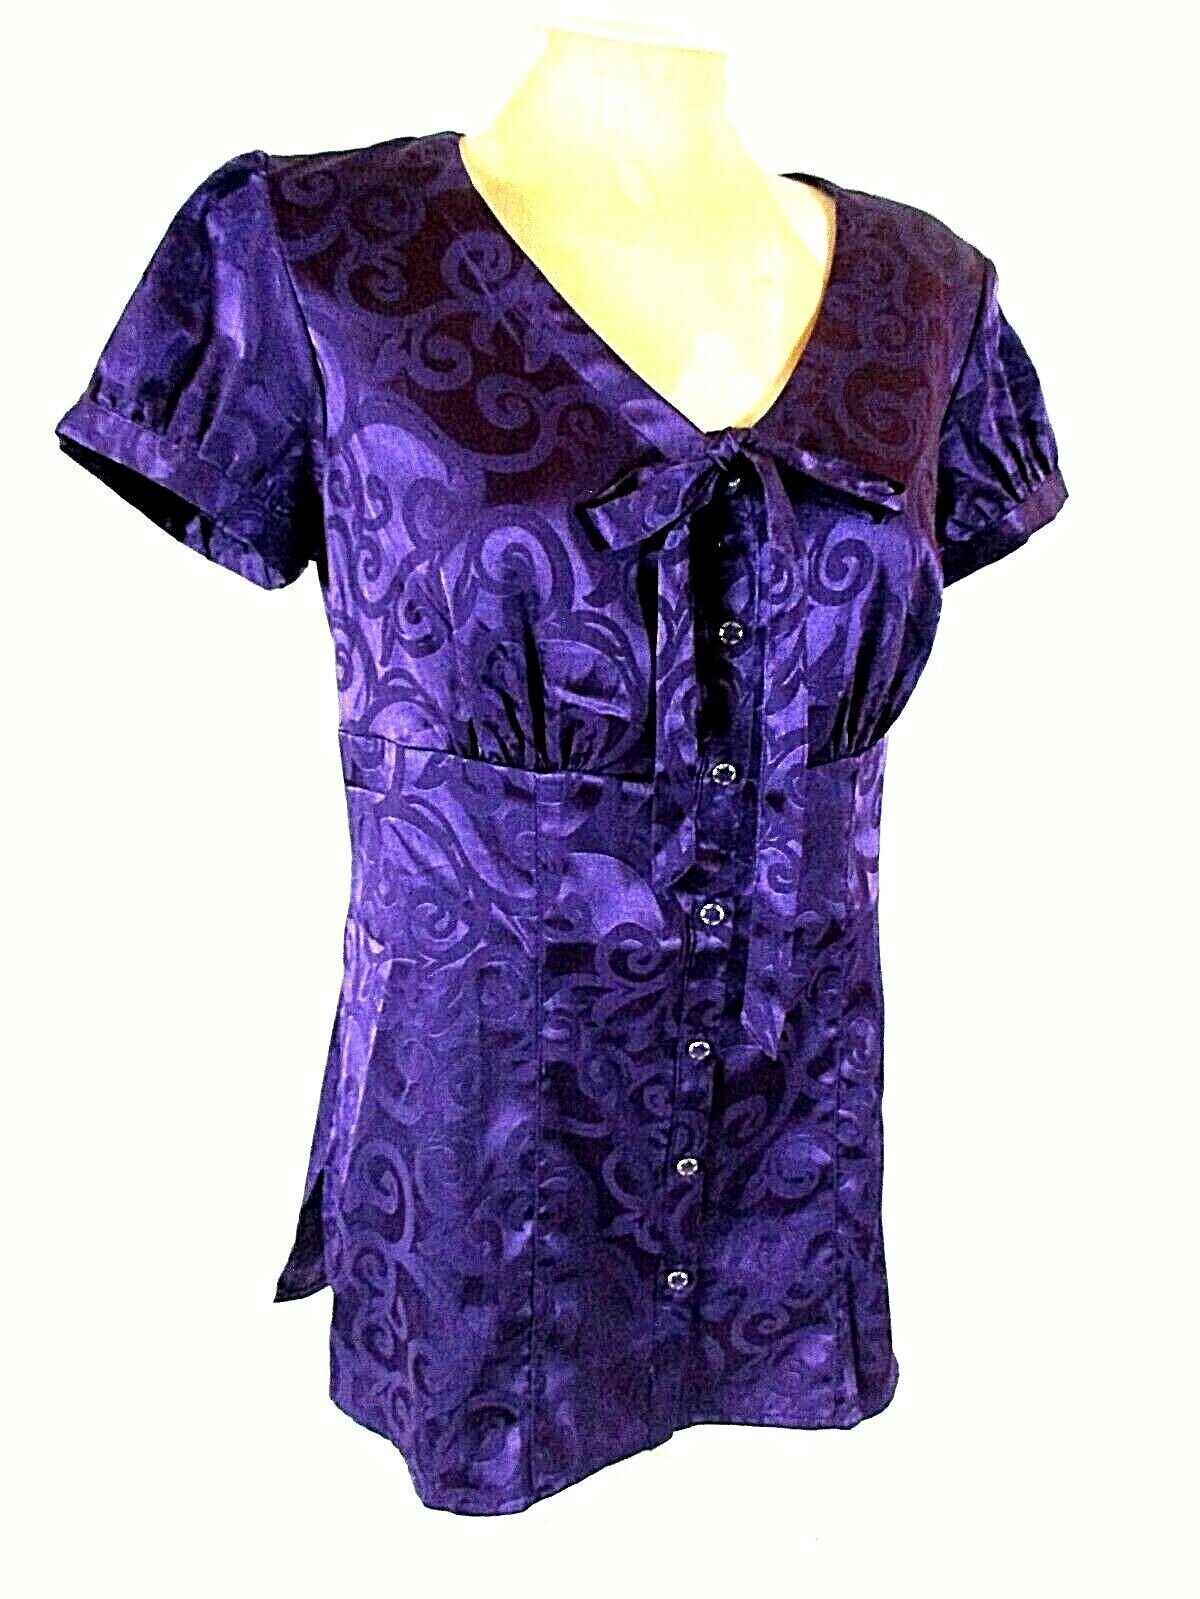 Primary image for Studio 1940 Women's Small Purple Floral Button Down Tie V Neck Top (O)pm